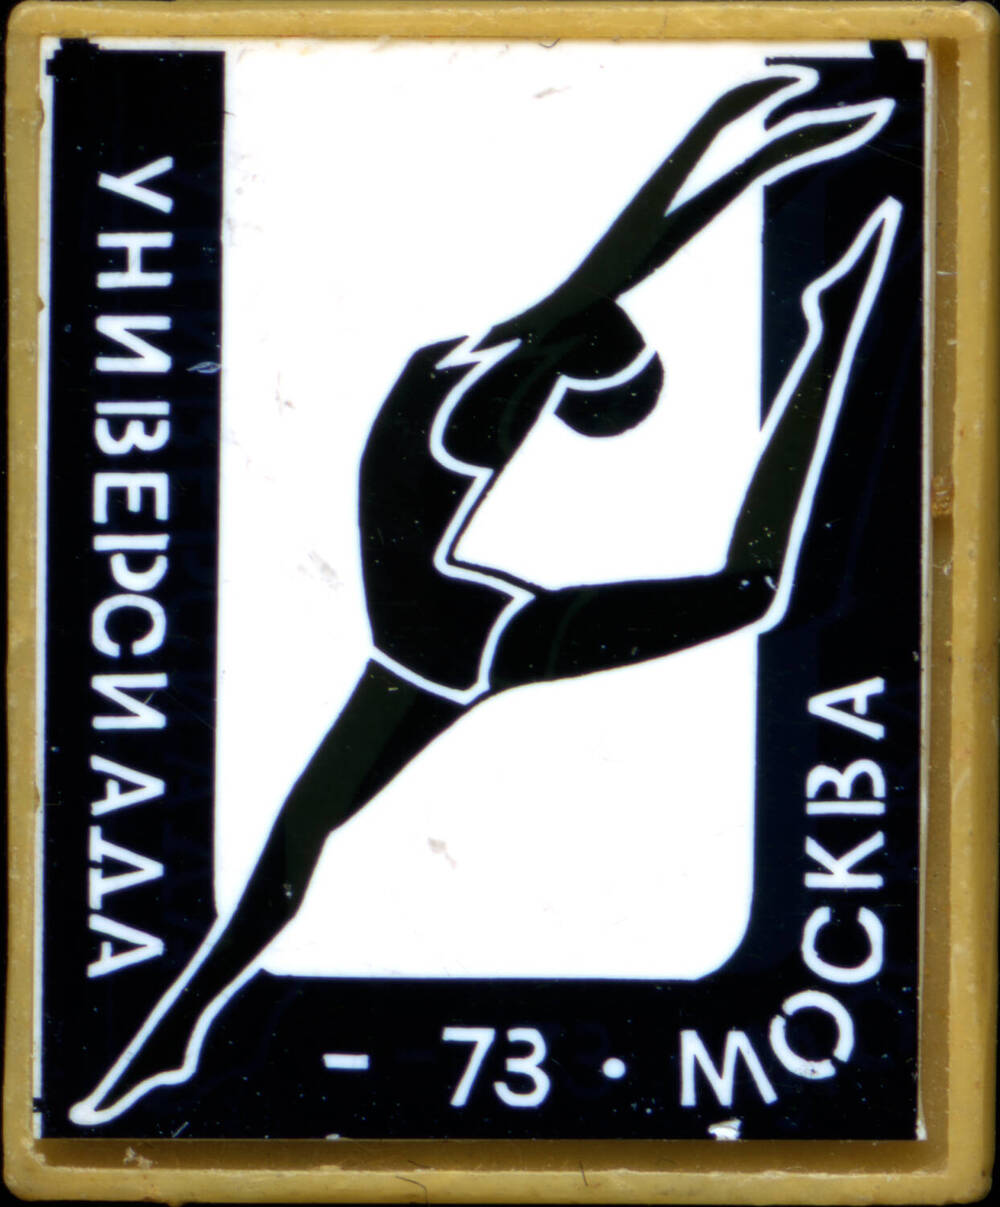 Значок Универсиада-73 Москва из коллекции Спорт